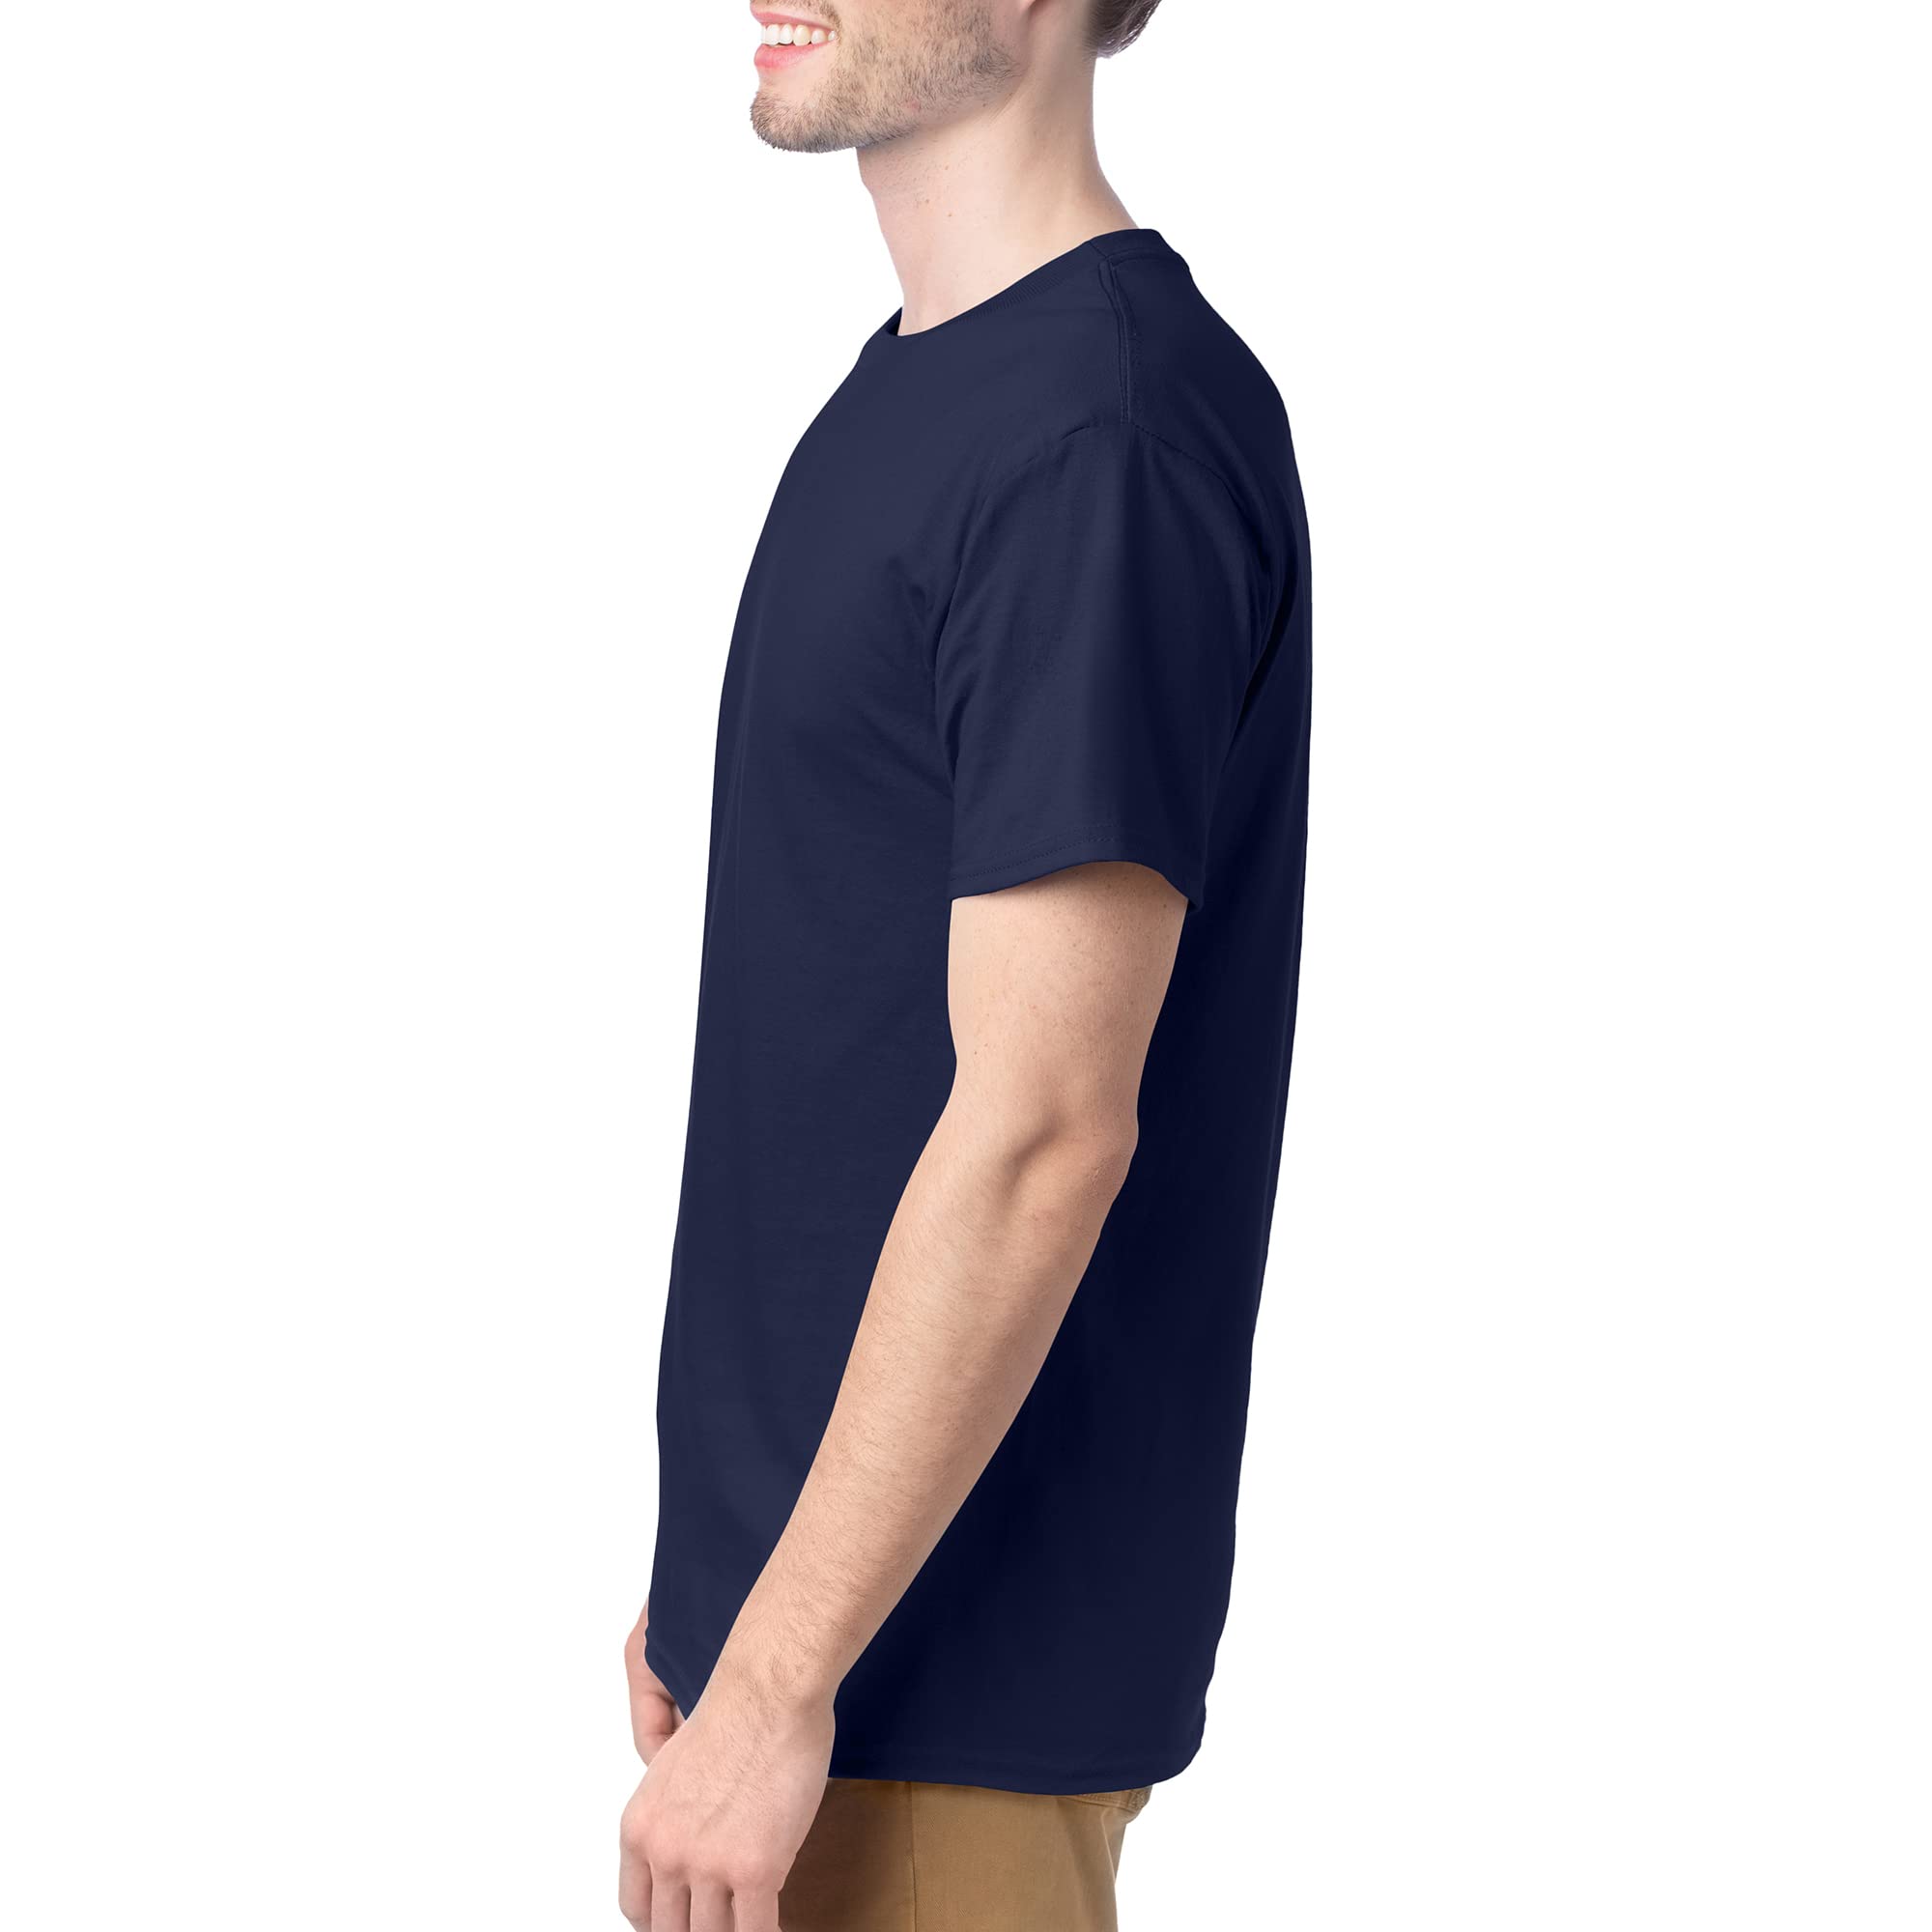 Hanes Men's T-Shirt Pack, Essential-T Cotton T-Shirt 4-Pack, Hanes-Our Best Short Sleeve Tee, Super Soft Cotton, Multipack